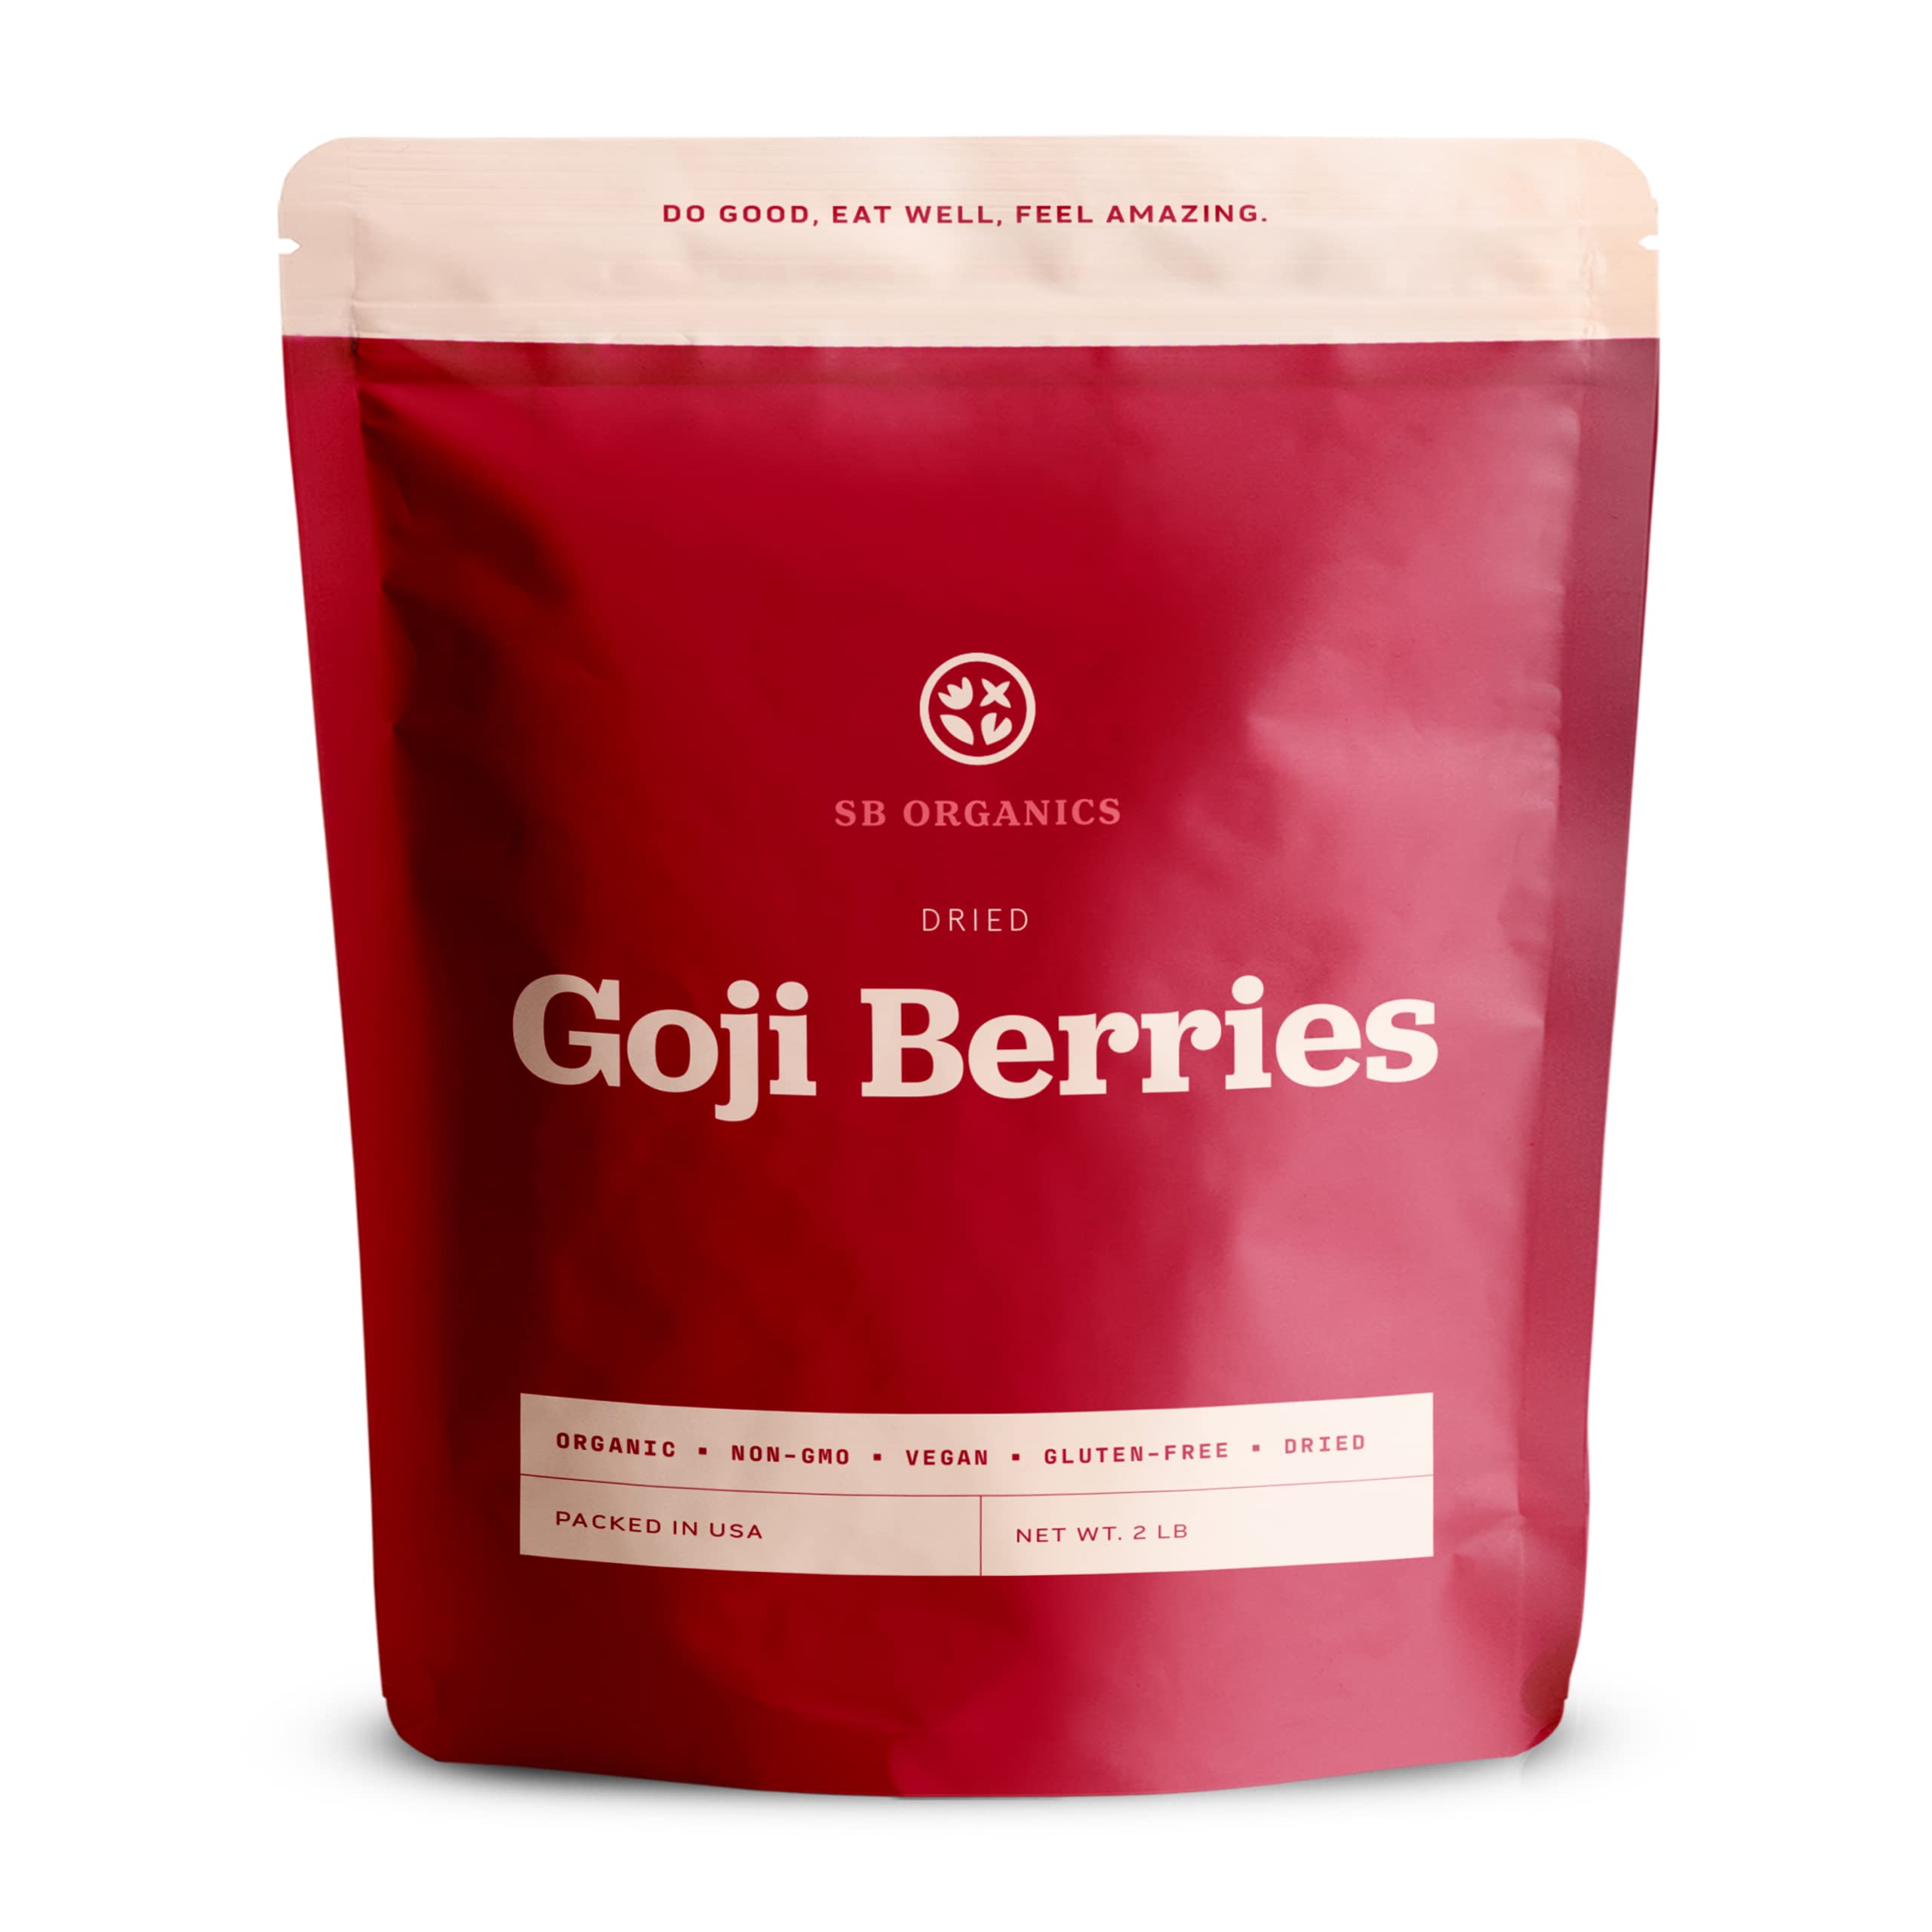 SB Organics Goji Berries - 2lb 1 Pack Bag of Organic Non-GMO Vegan Dried Goji Berry - Free of Sulfites, Gluten, Dairy, and Soy